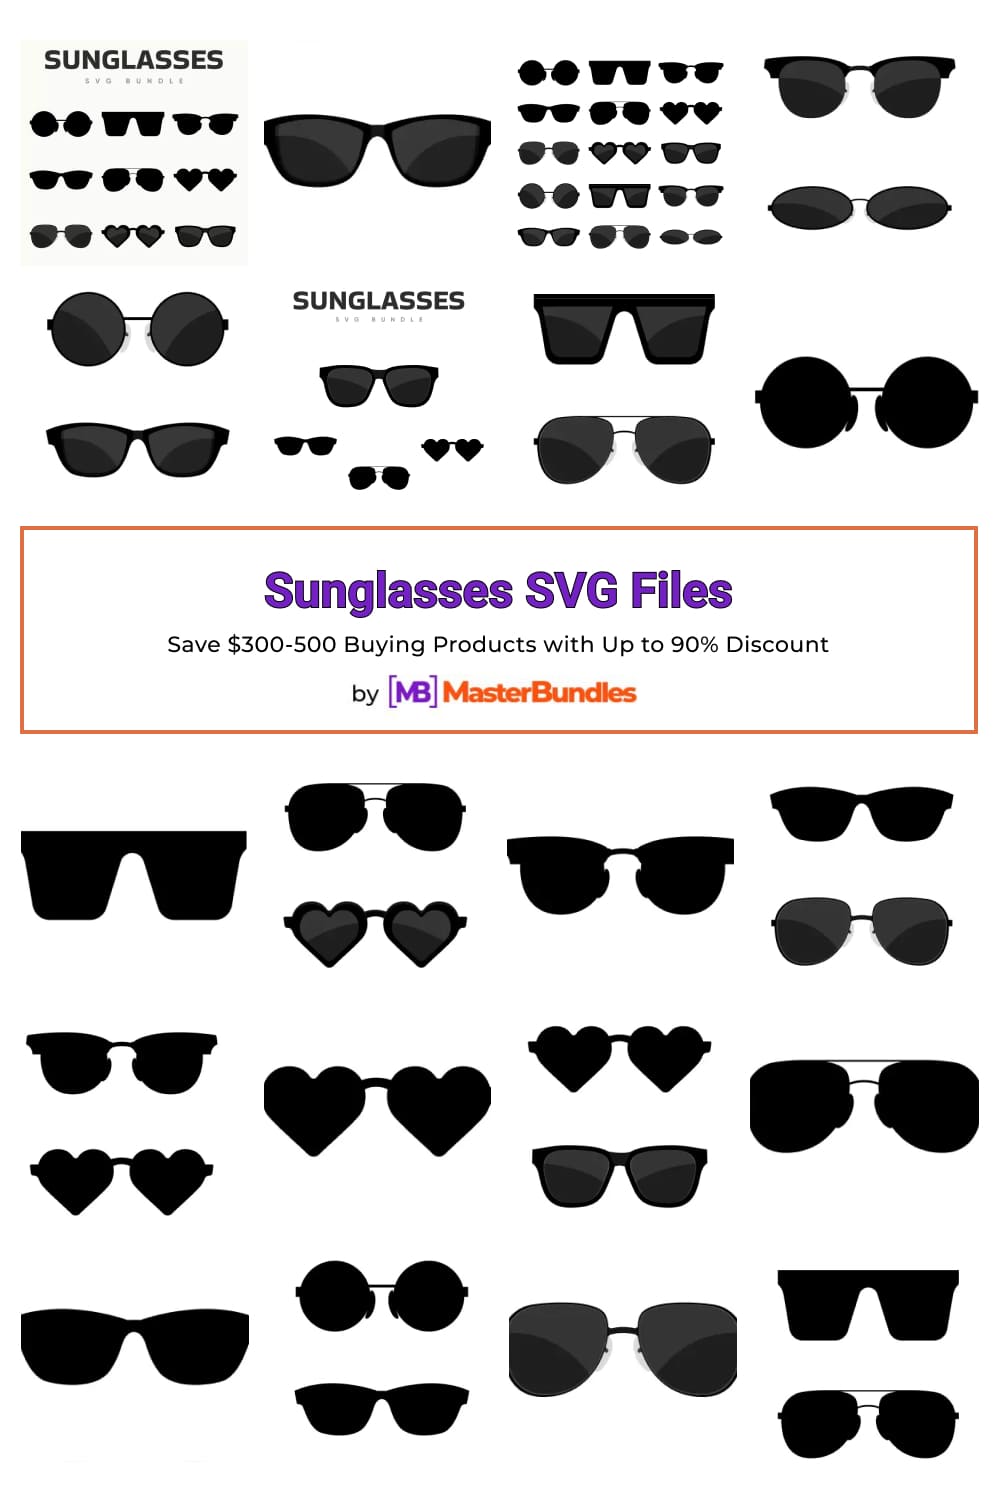 Sunglasses SVG Files Pinterest image.